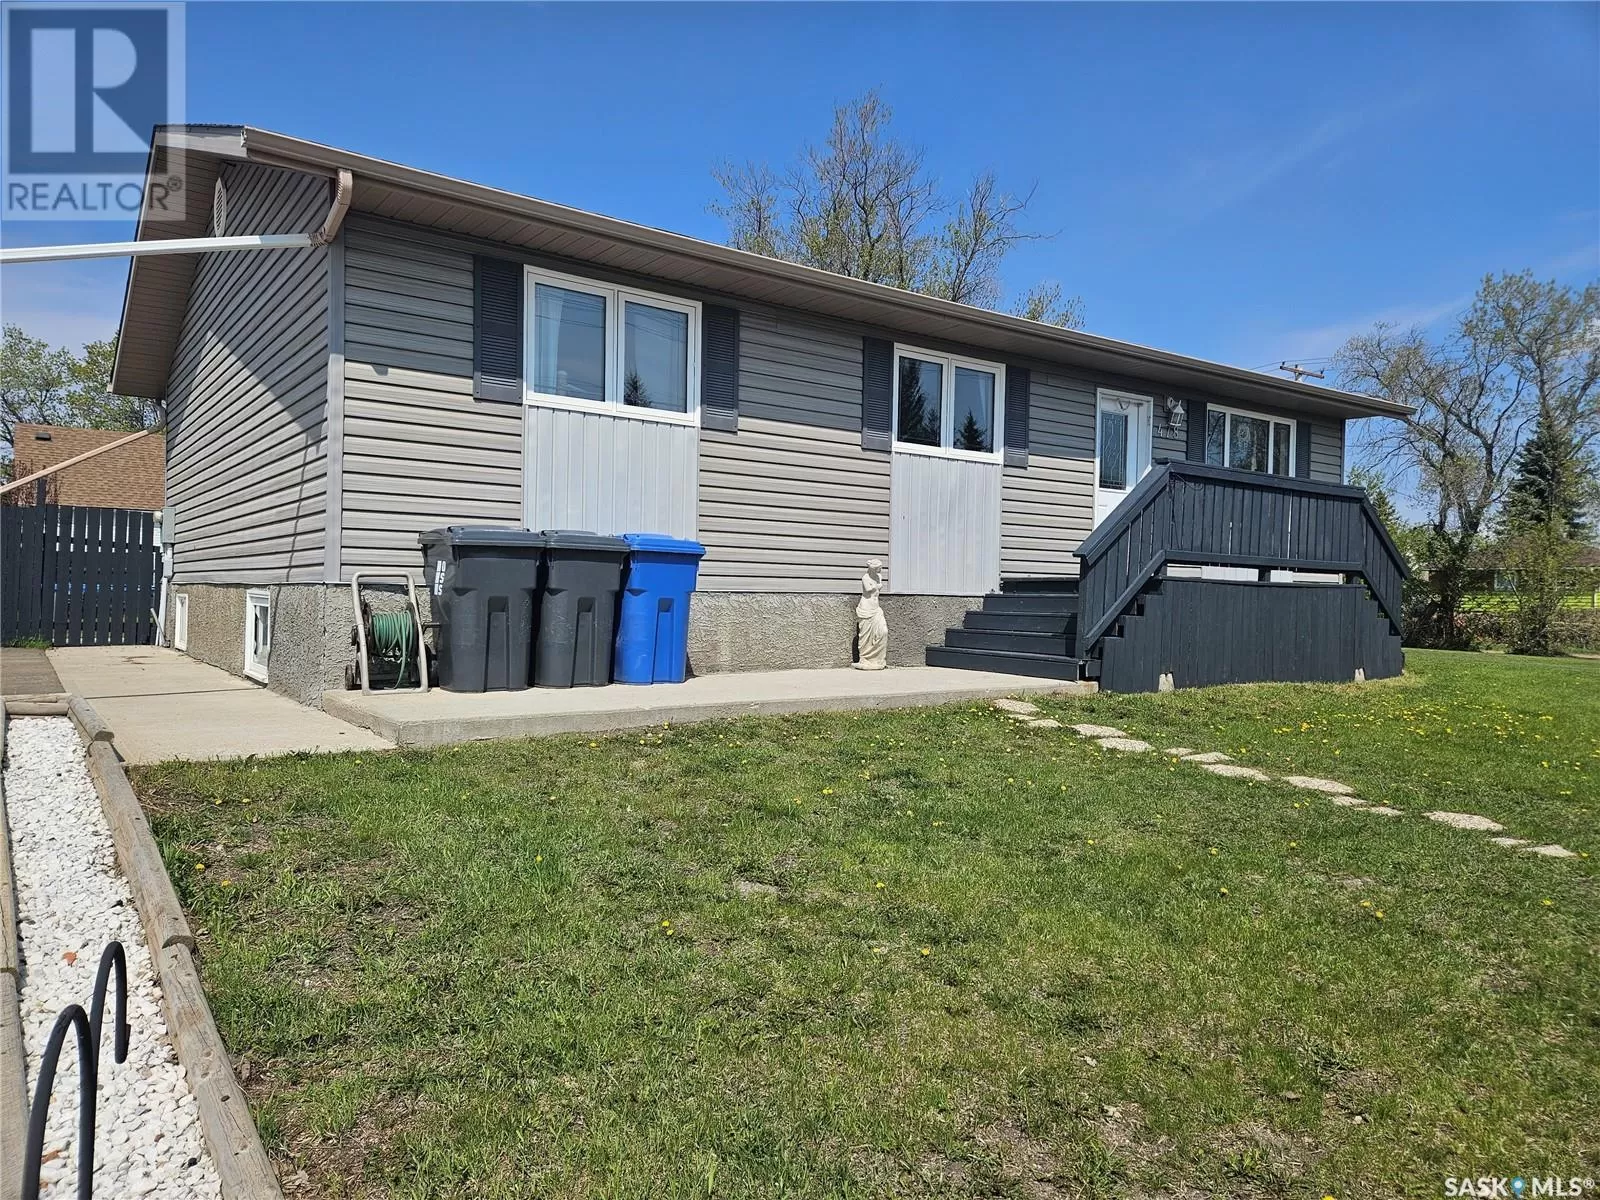 House for rent: 478 2nd Avenue E, Melville, Saskatchewan S0A 2P0